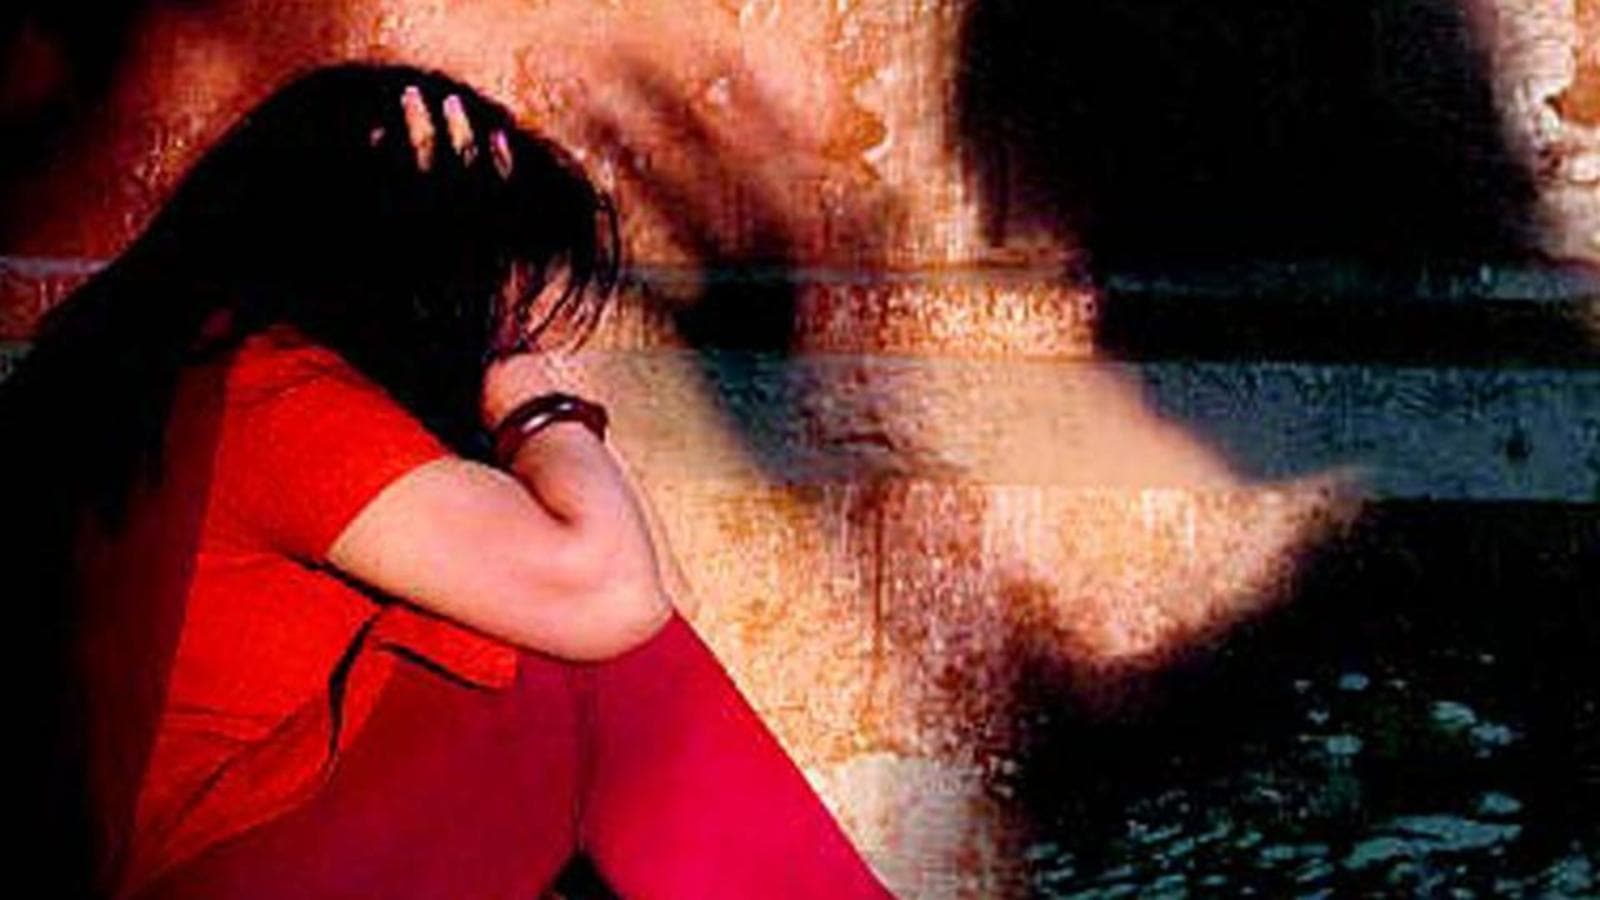 Bengali Bf Movie Rape Rape - Kerala model gang-raped in Kochi, one arrested: Police | Latest News India  - Hindustan Times